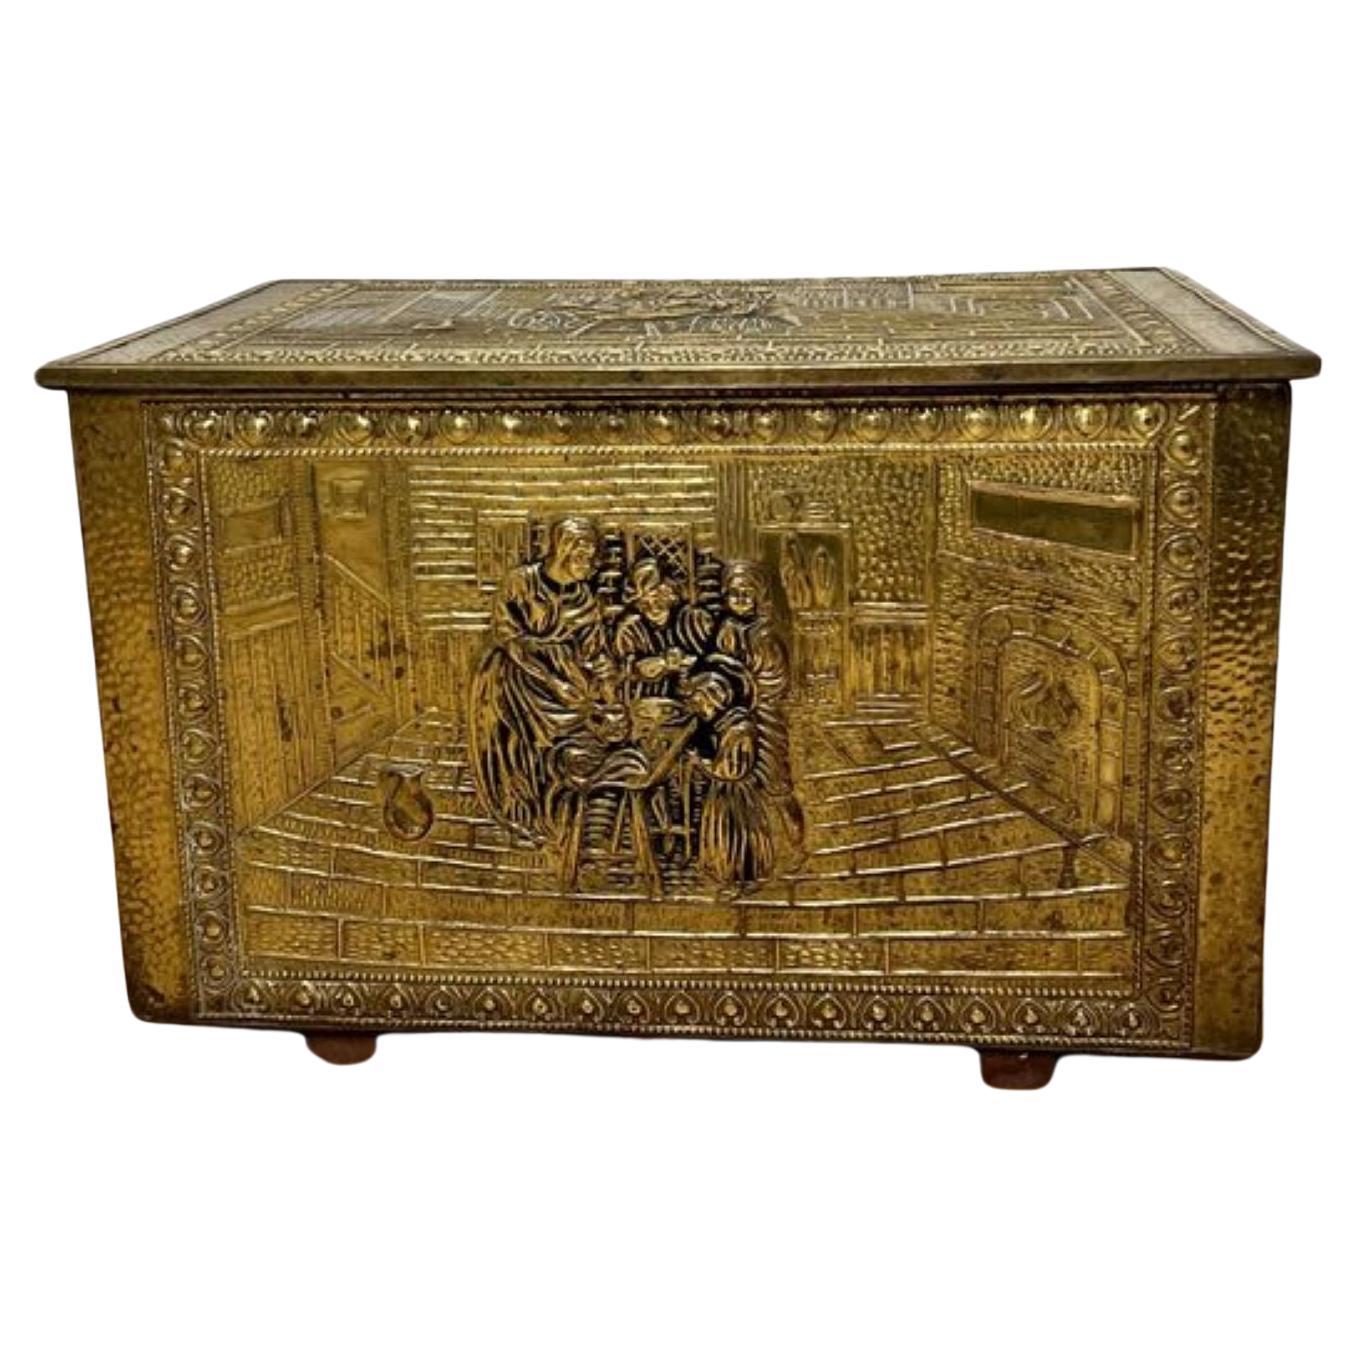 Antique quality ornate brass coal box